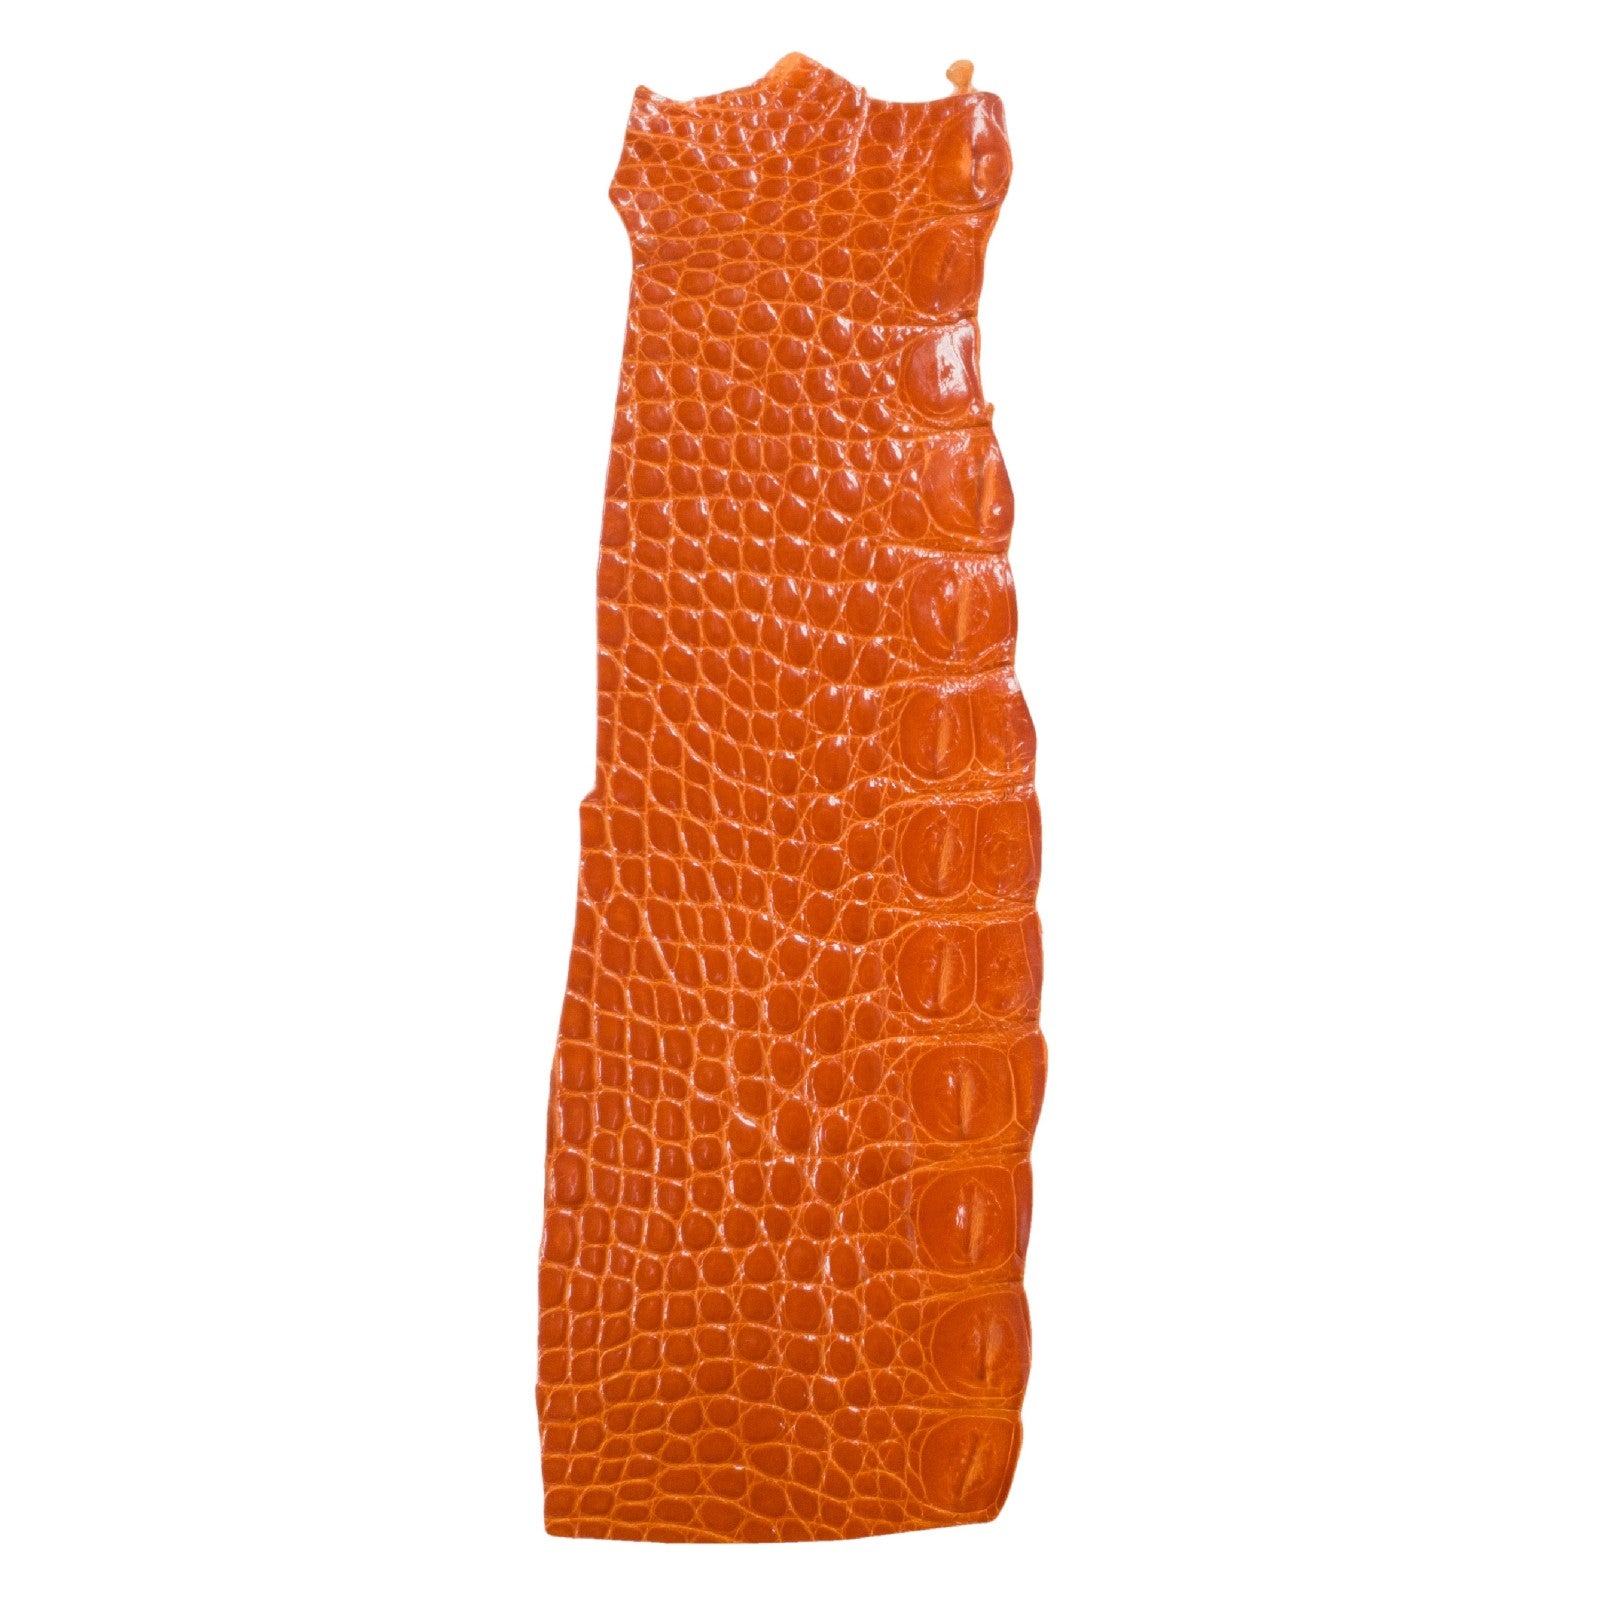 Alligator Skin Flank Various Colors Genuine Hide, Fire Orange | The Leather Guy